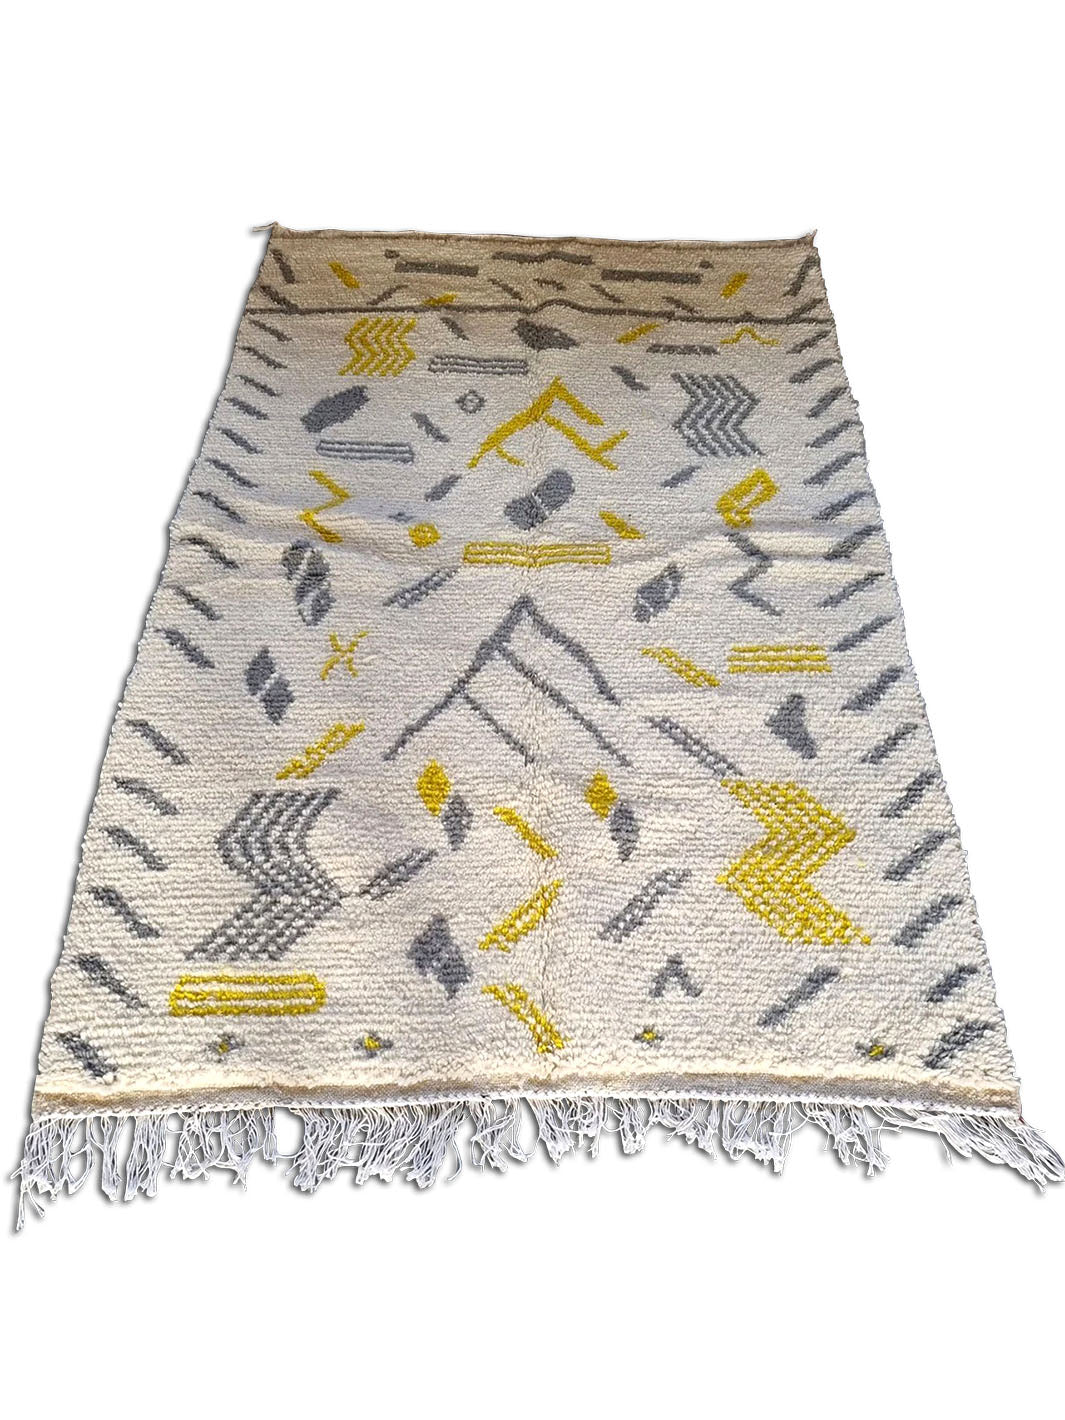 Handcrafted Berber Carpet Azilal | 1.52x2.48m / 4.9x8.1ft Libitii wool LIB1001